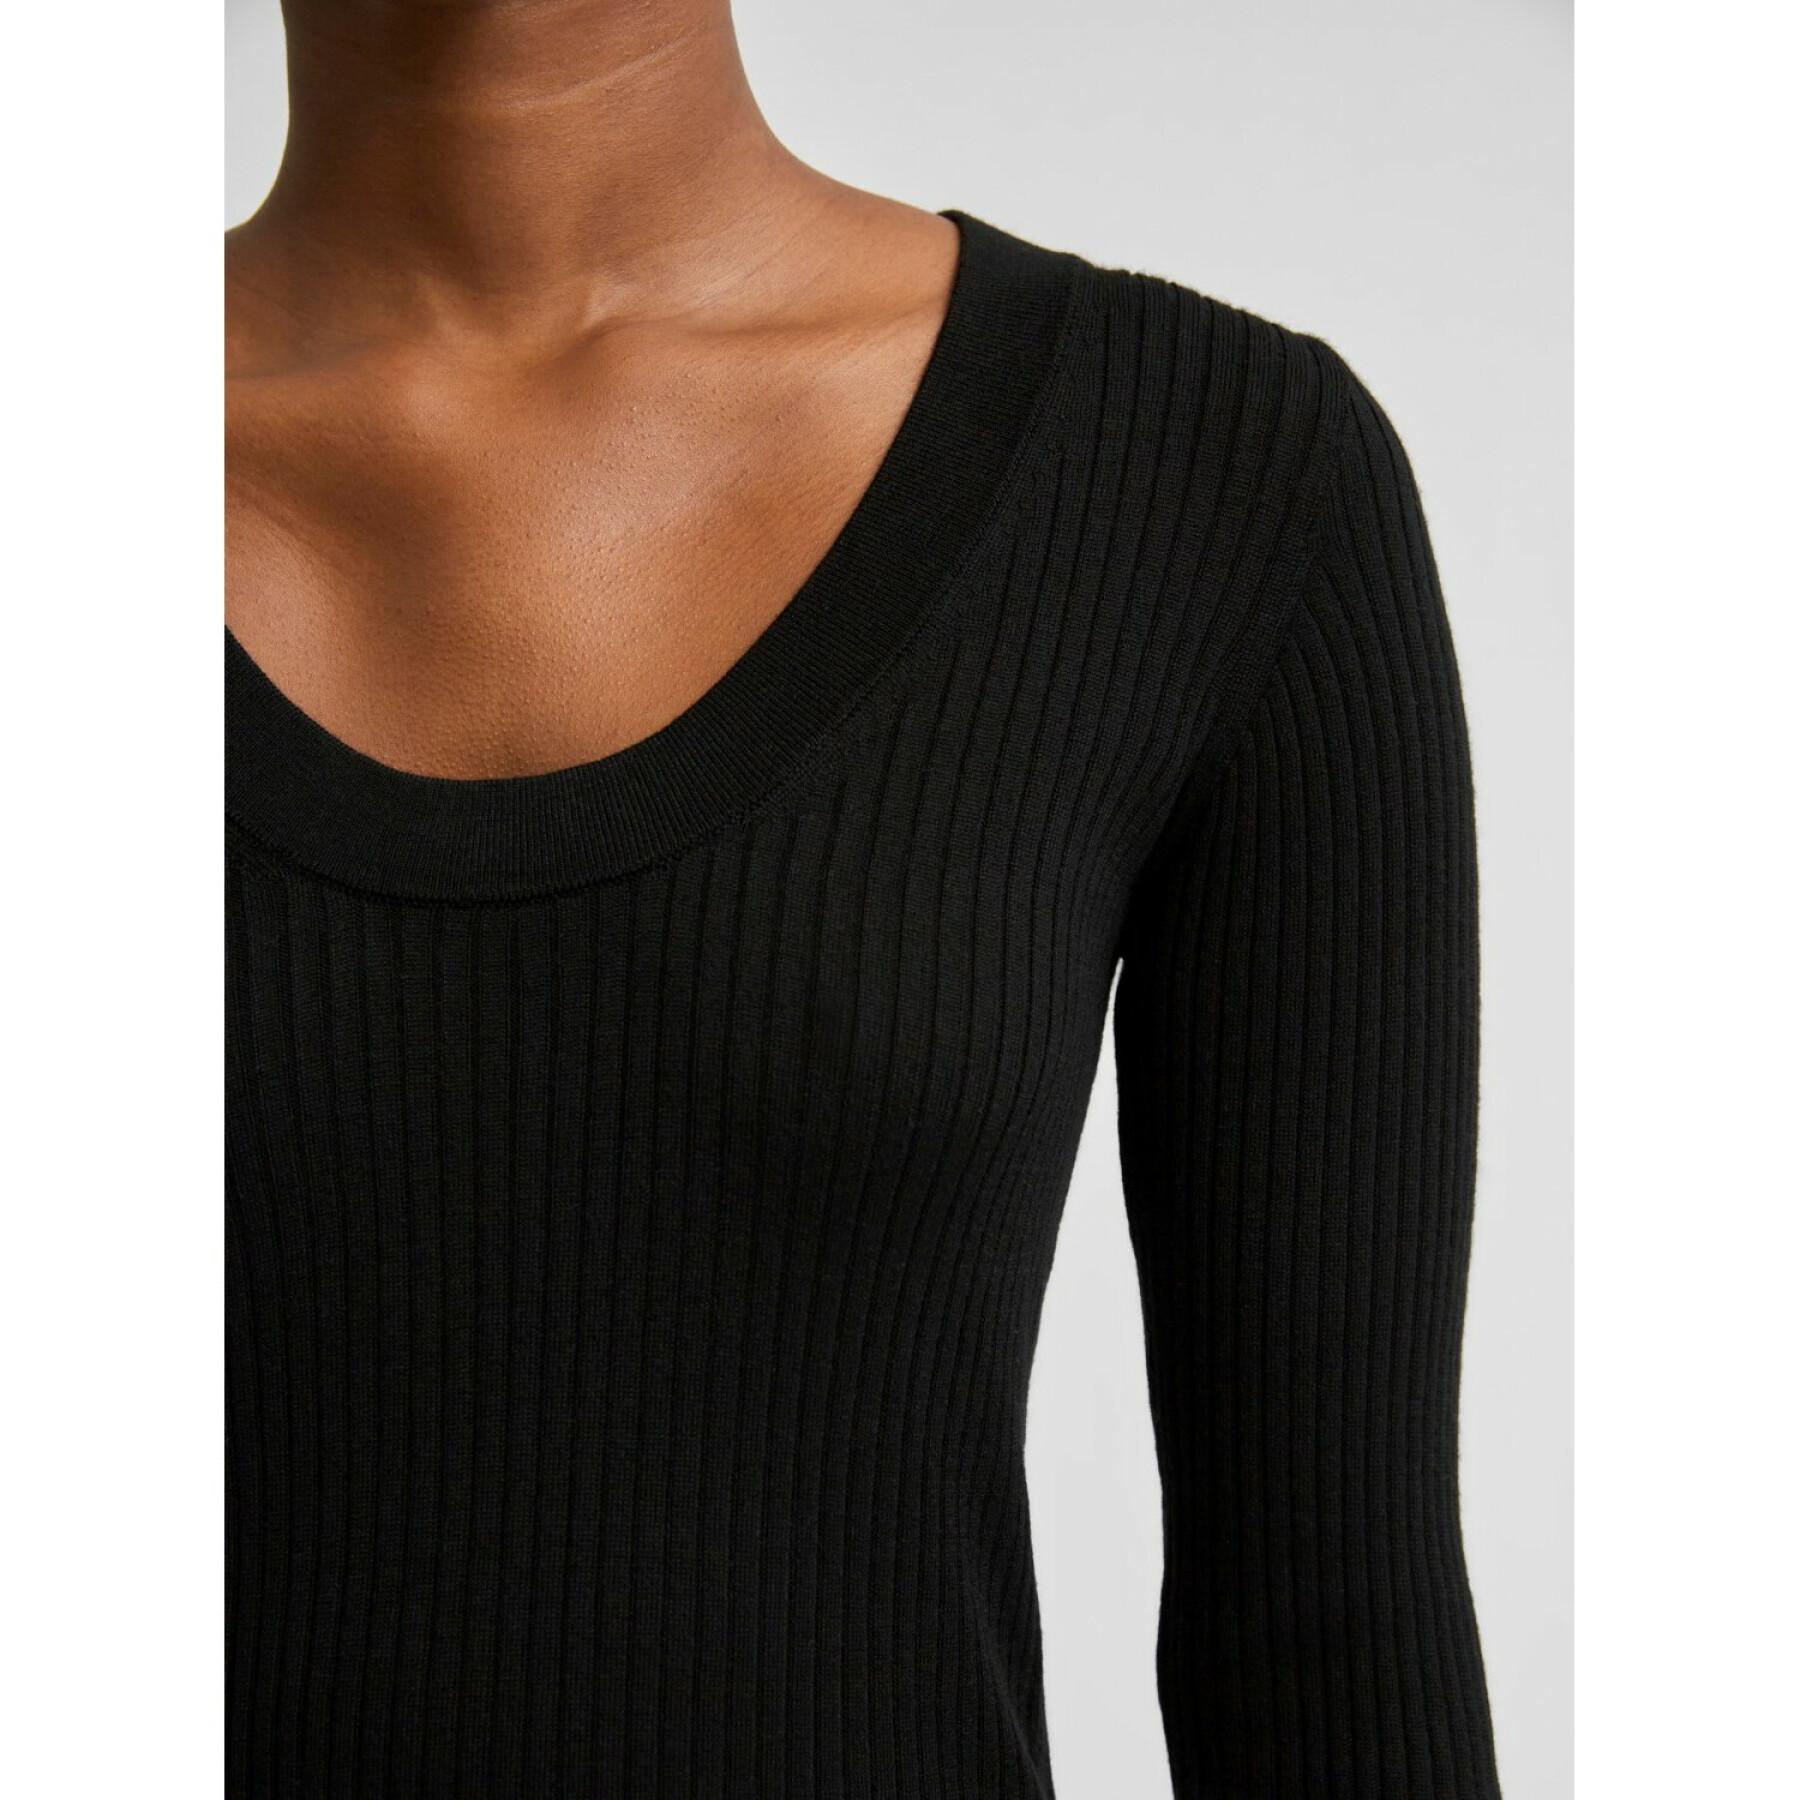 Women's u-neck sweater Selected Costa